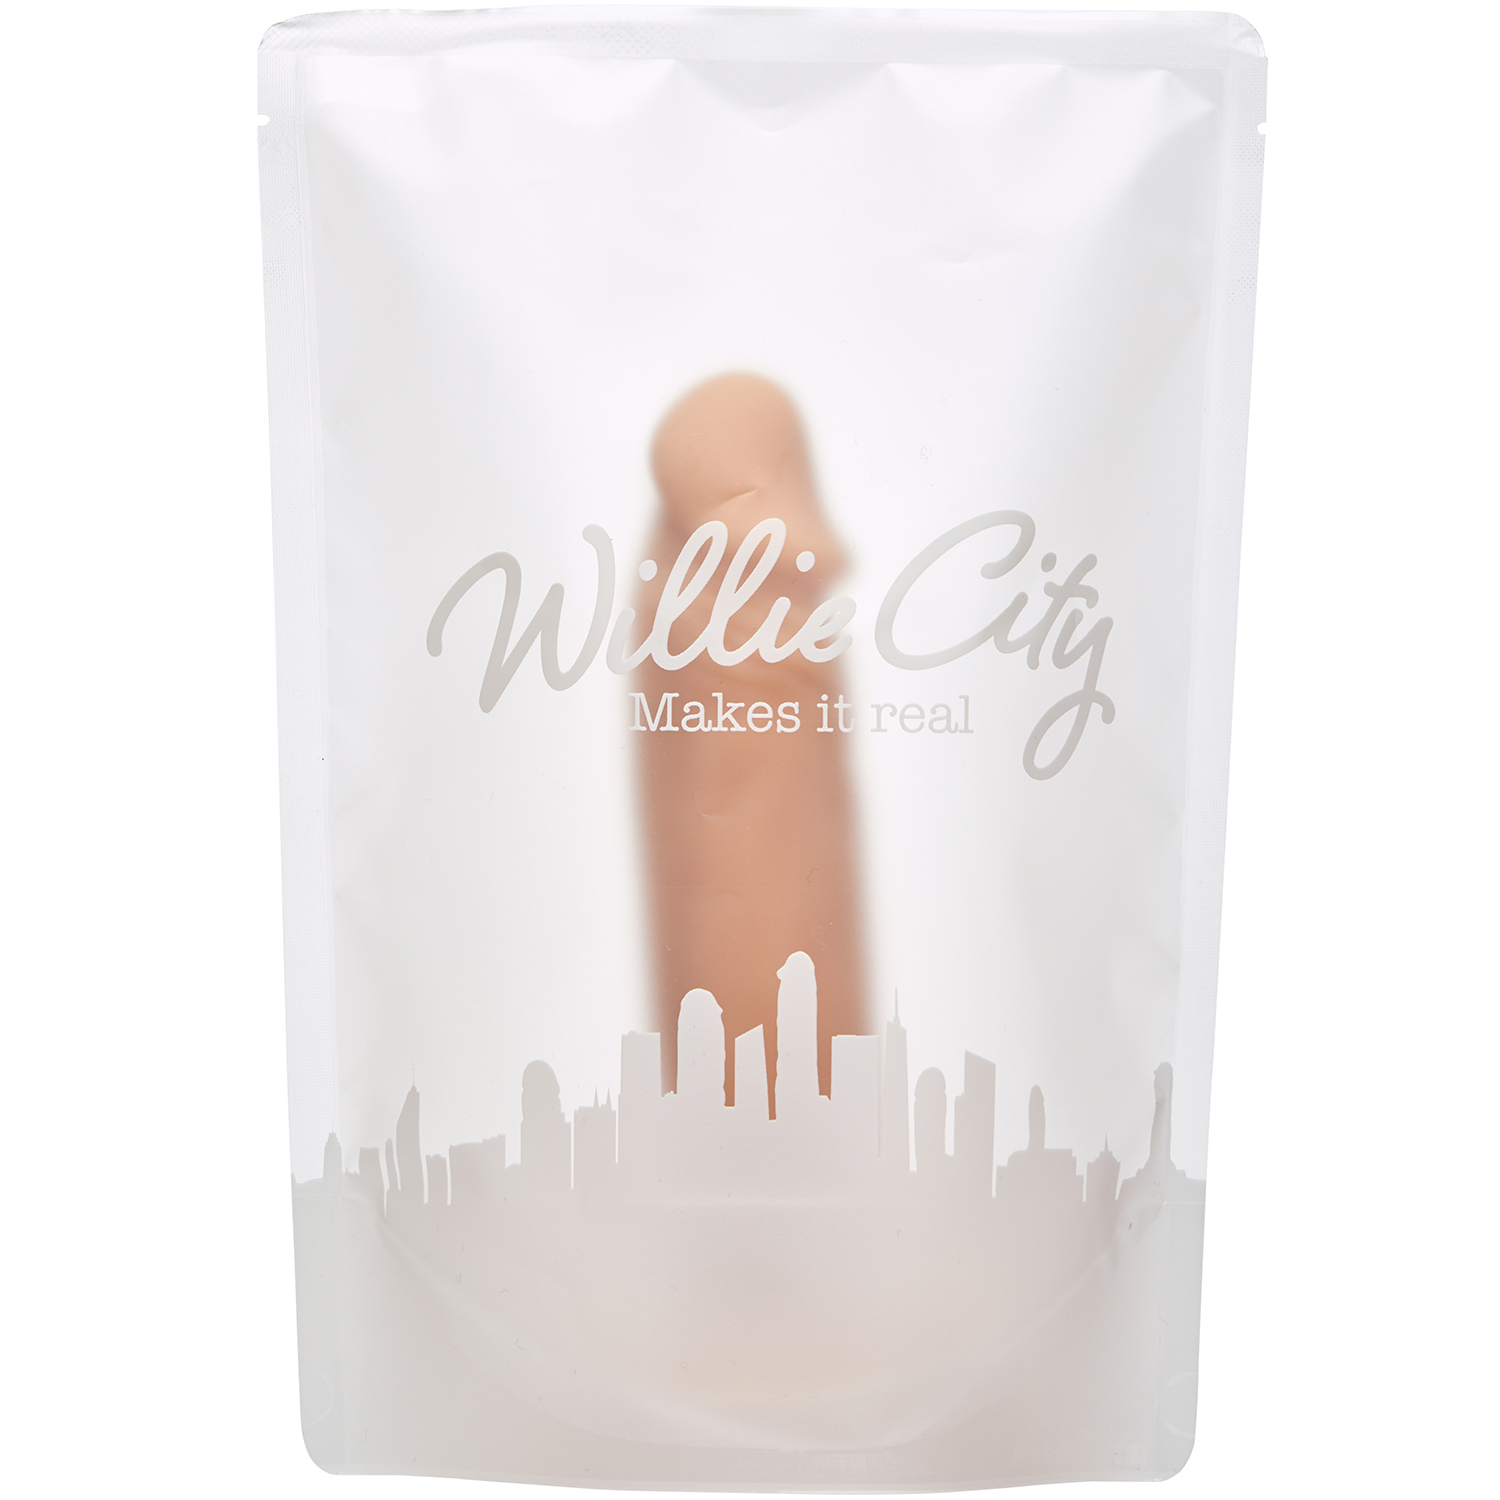 Willie City Realistisk Dildo med Sugekop 19 cm    - Nude thumbnail